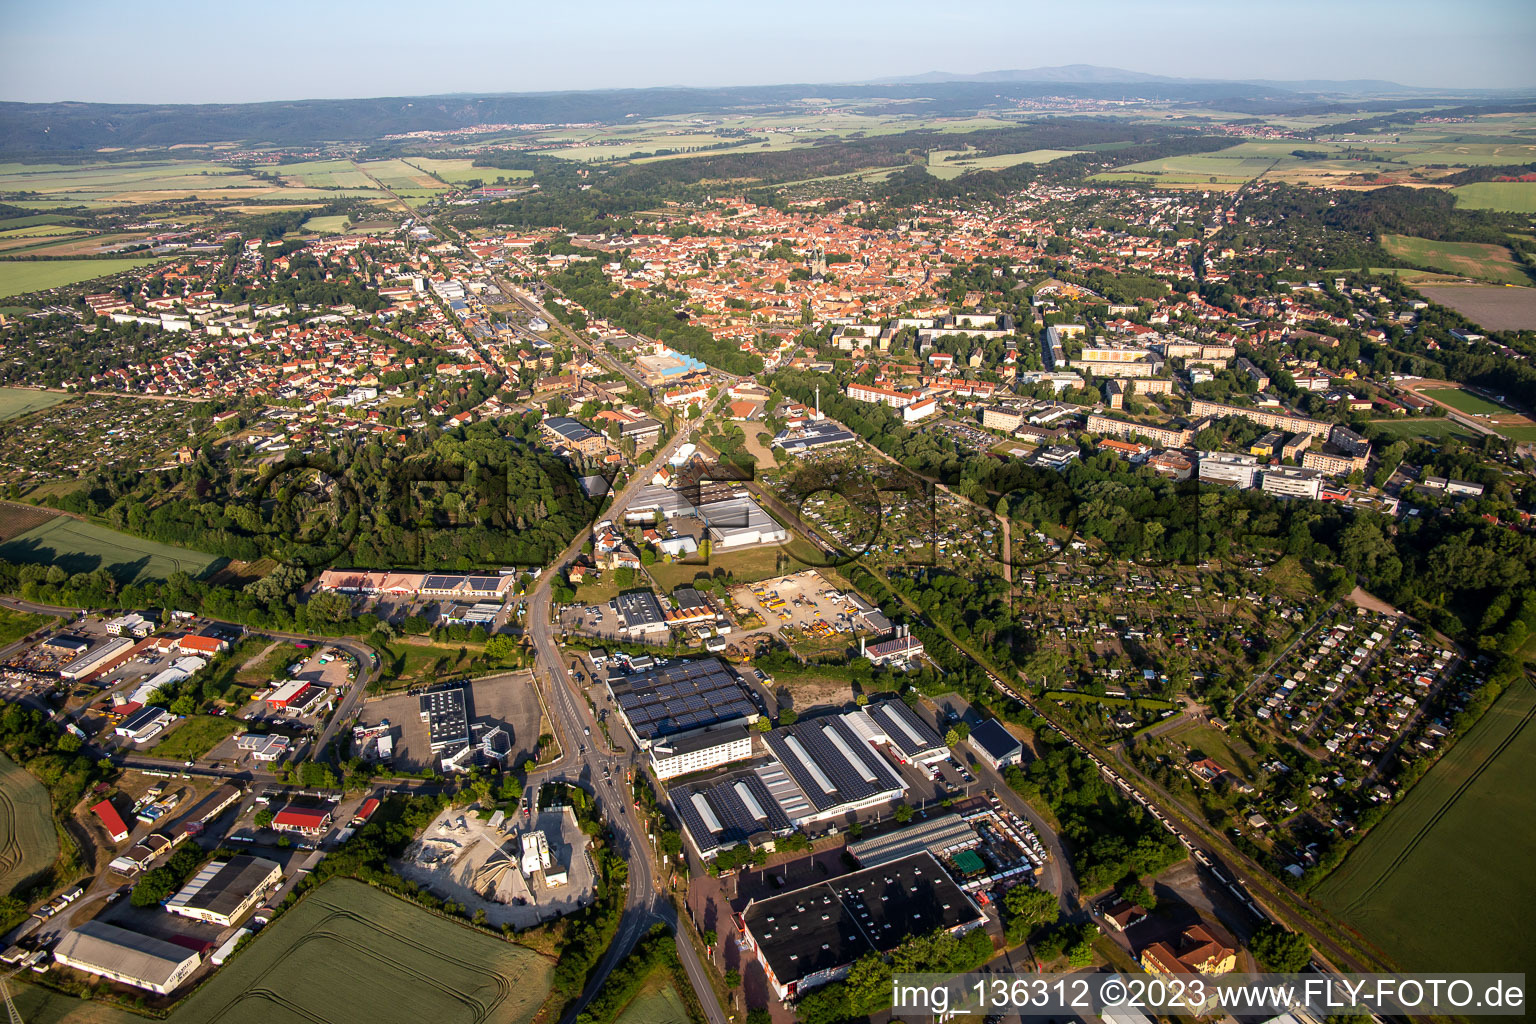 Magdeburger Straße commercial area in Quedlinburg in the state Saxony-Anhalt, Germany